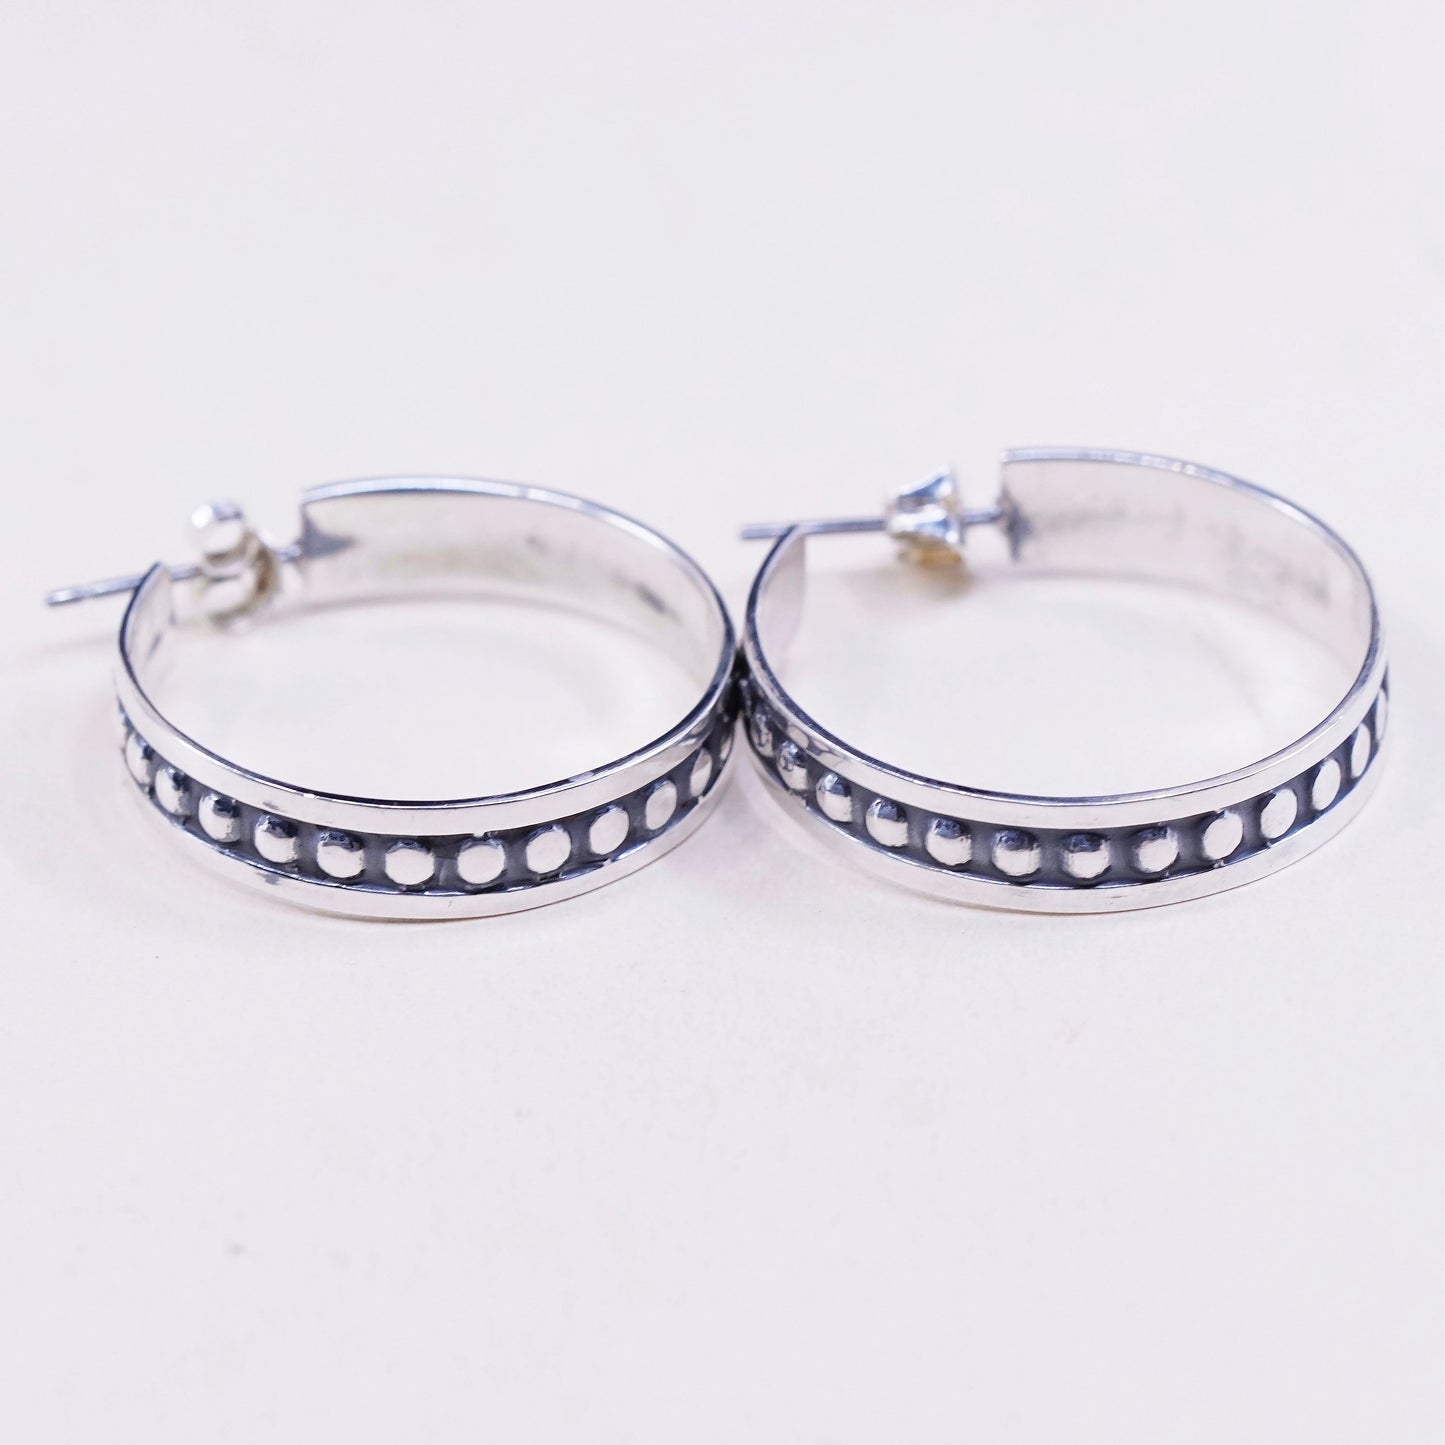 1”, Vintage mexico sterling silver wide hoops, 925 huggie earrings with beads